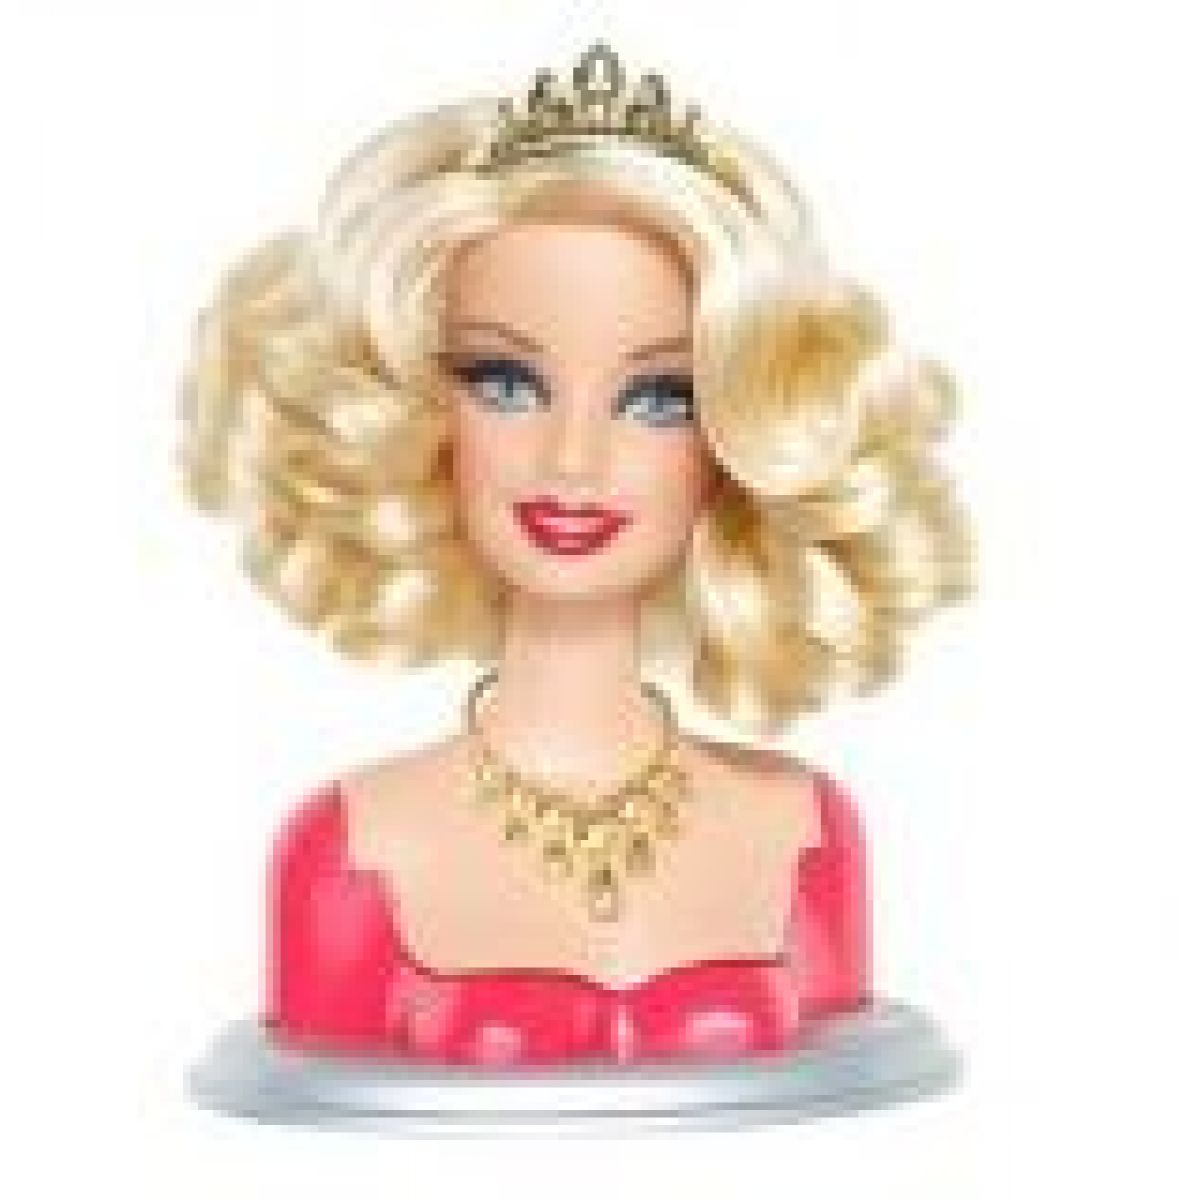 Barbie Fashionistas SS hlava T9123 - Sweetie